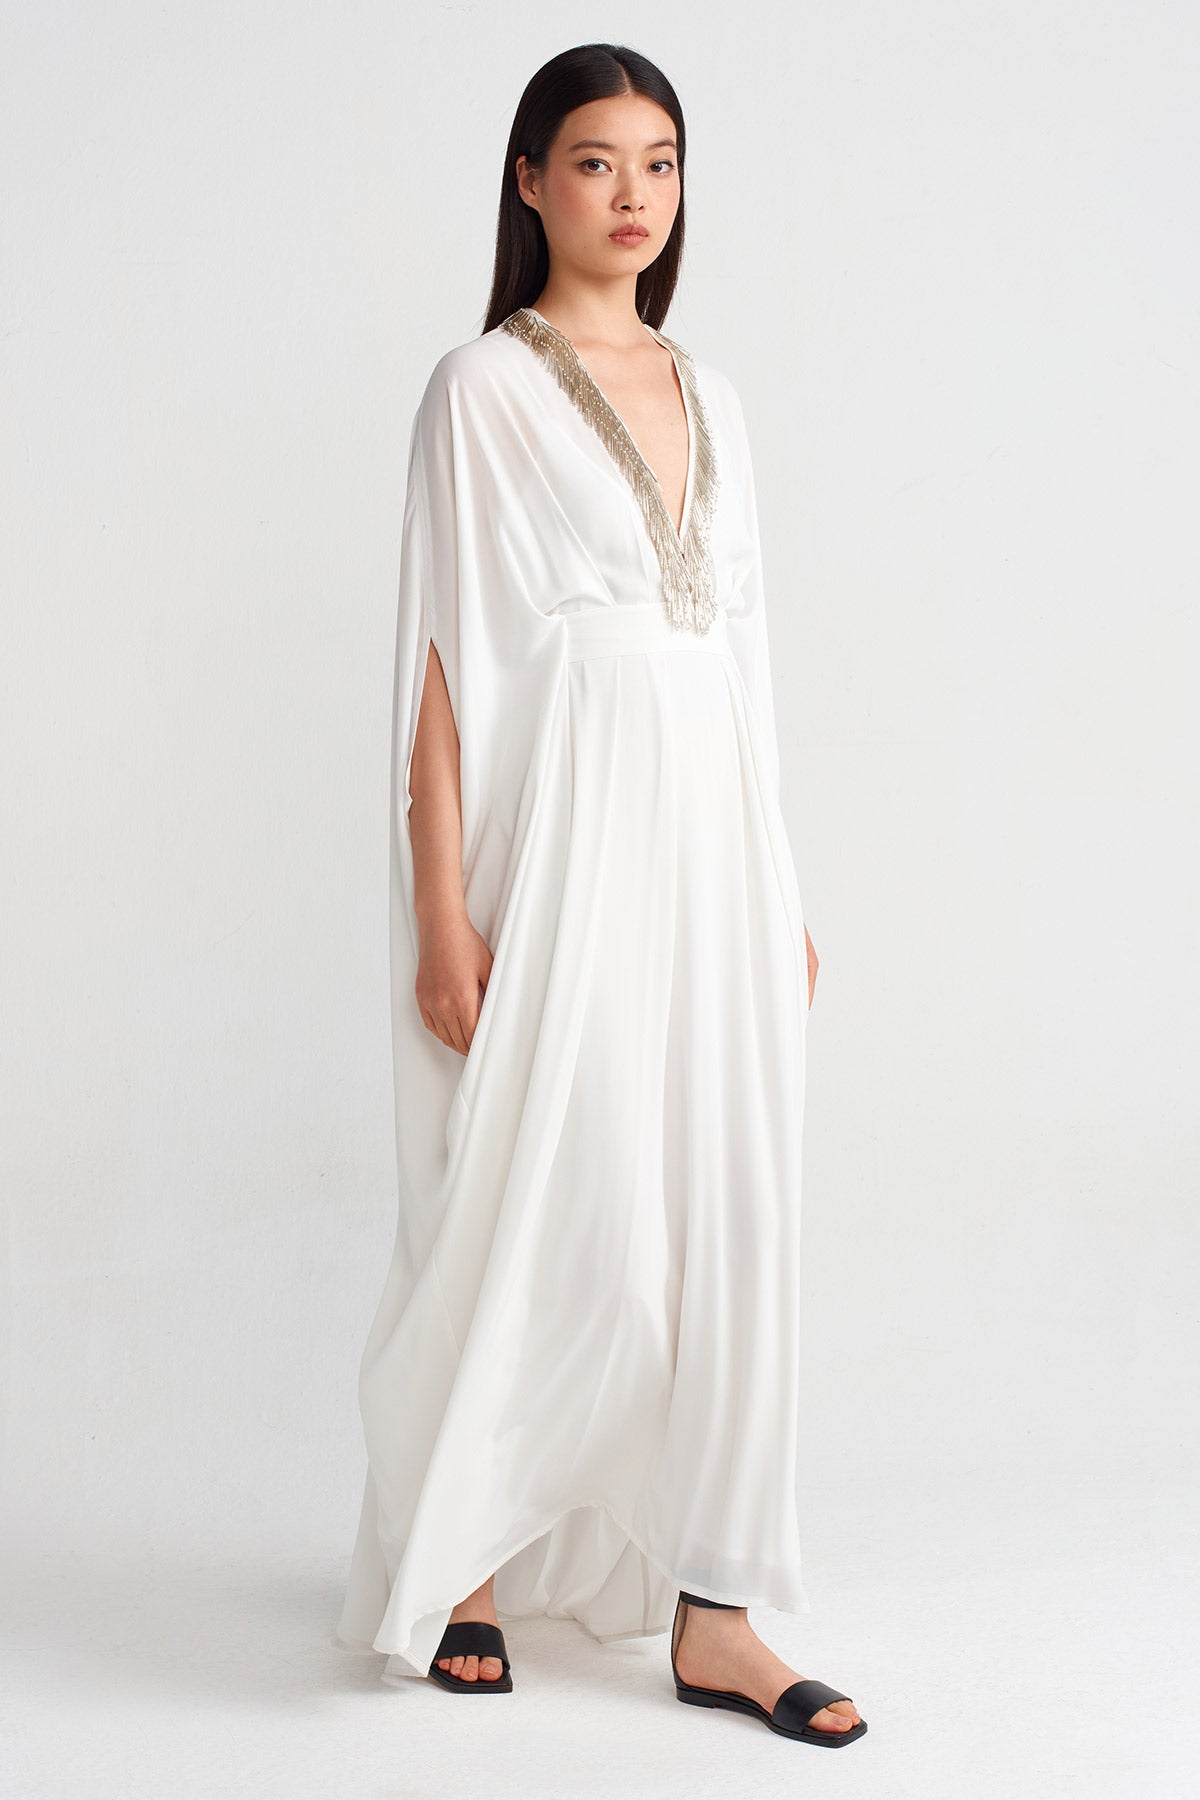 Off White Embroidered Neckline, Fitted Waist Elegant Dress-Y244014088